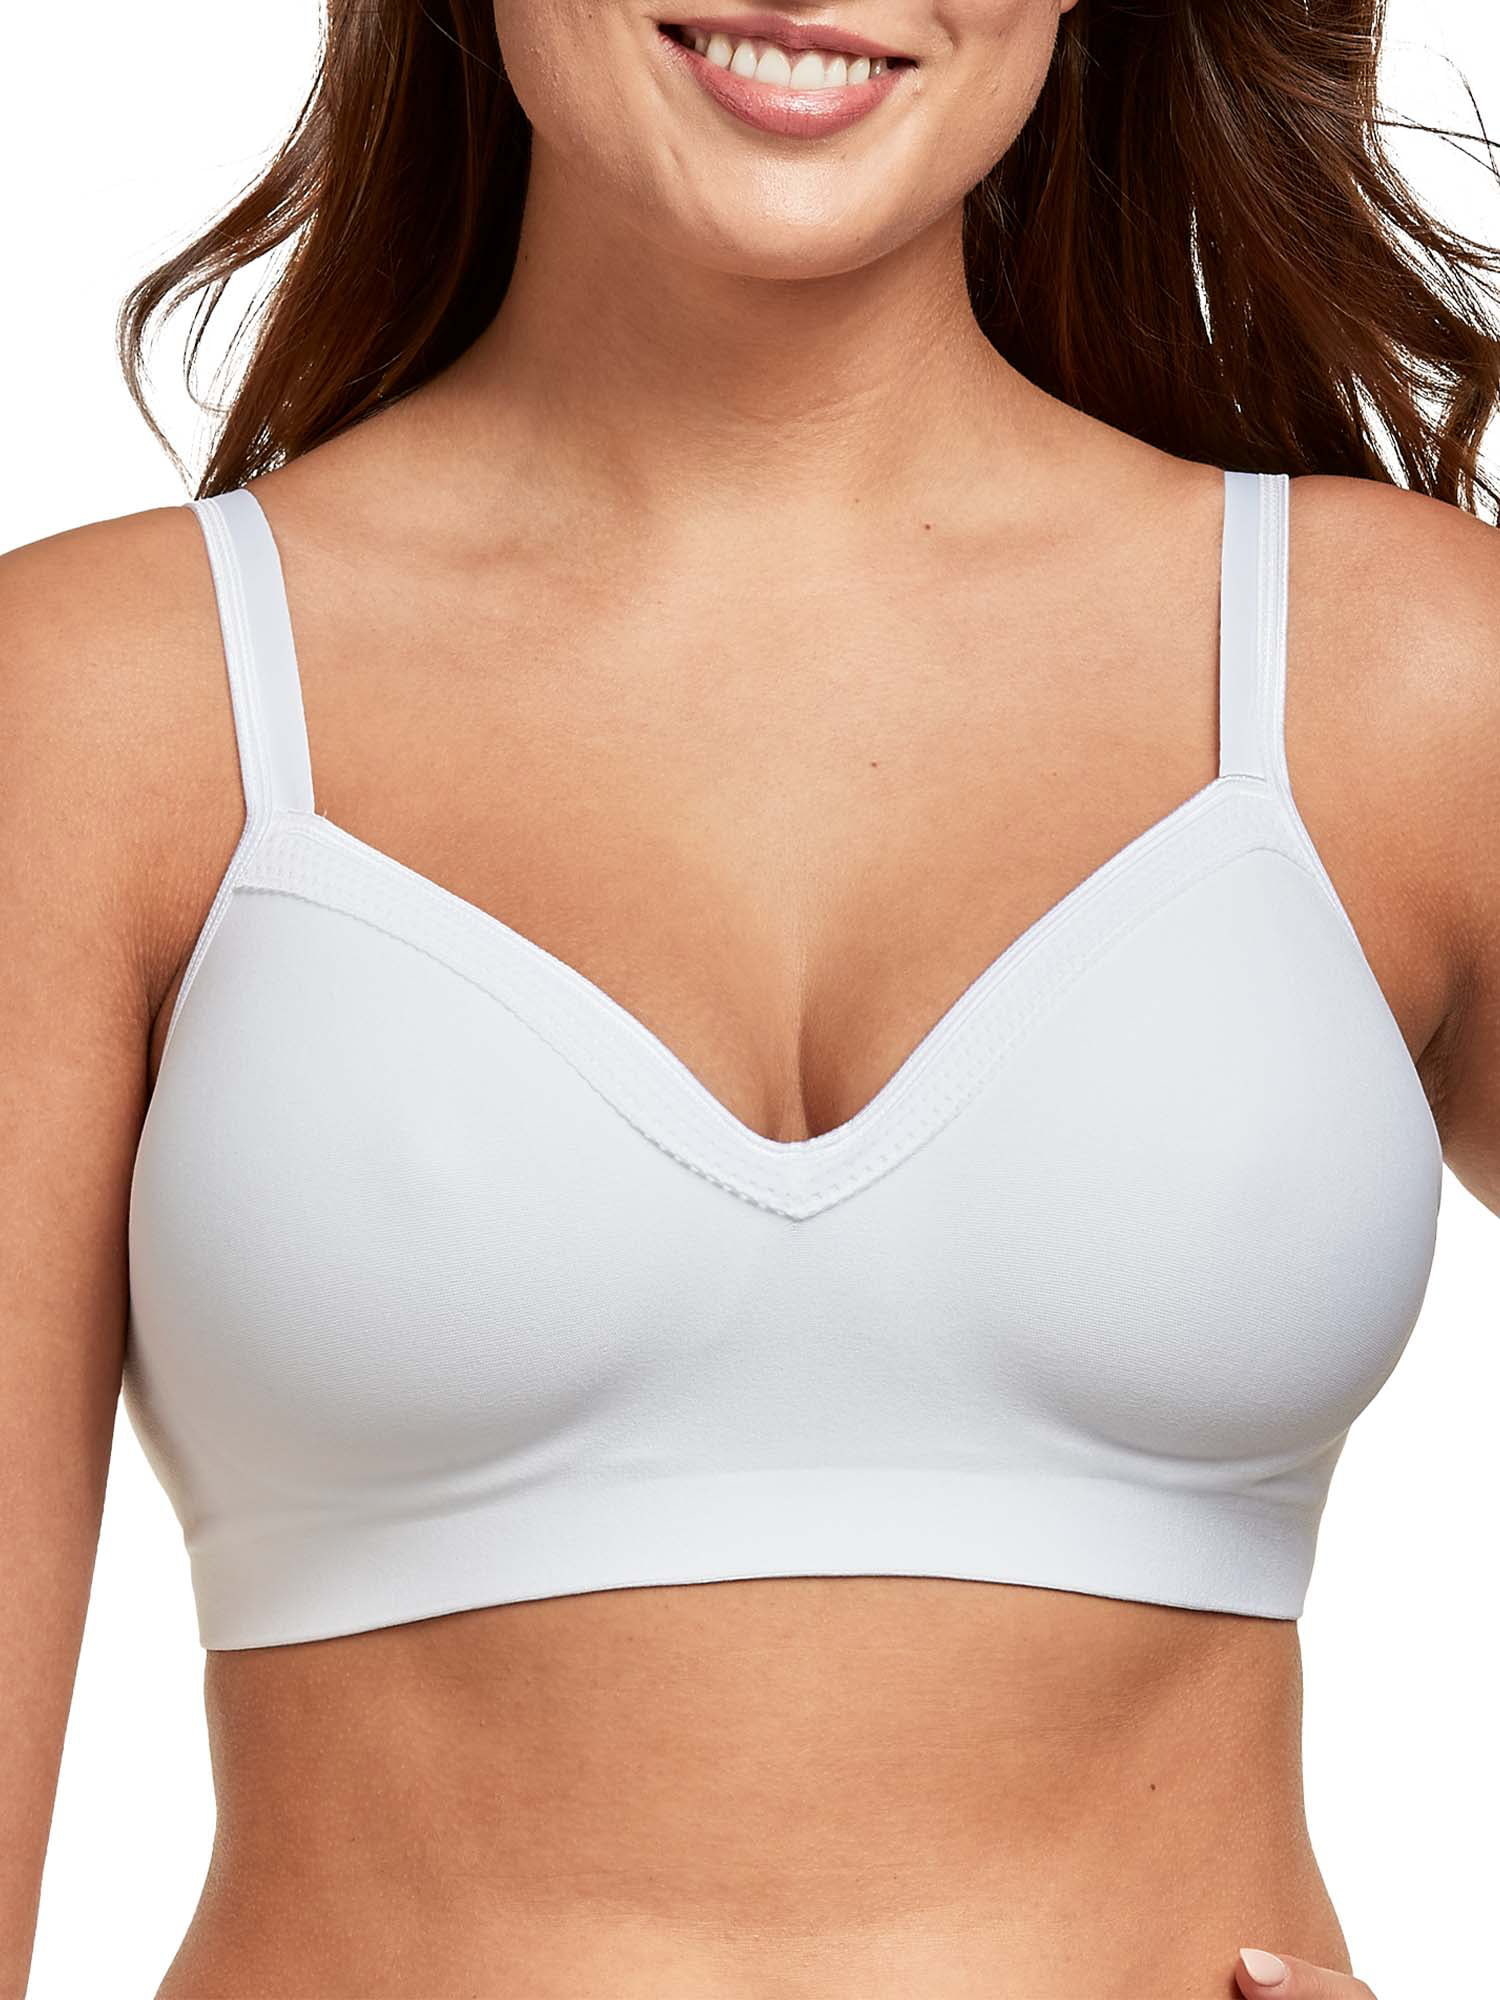 Model wearing white bra